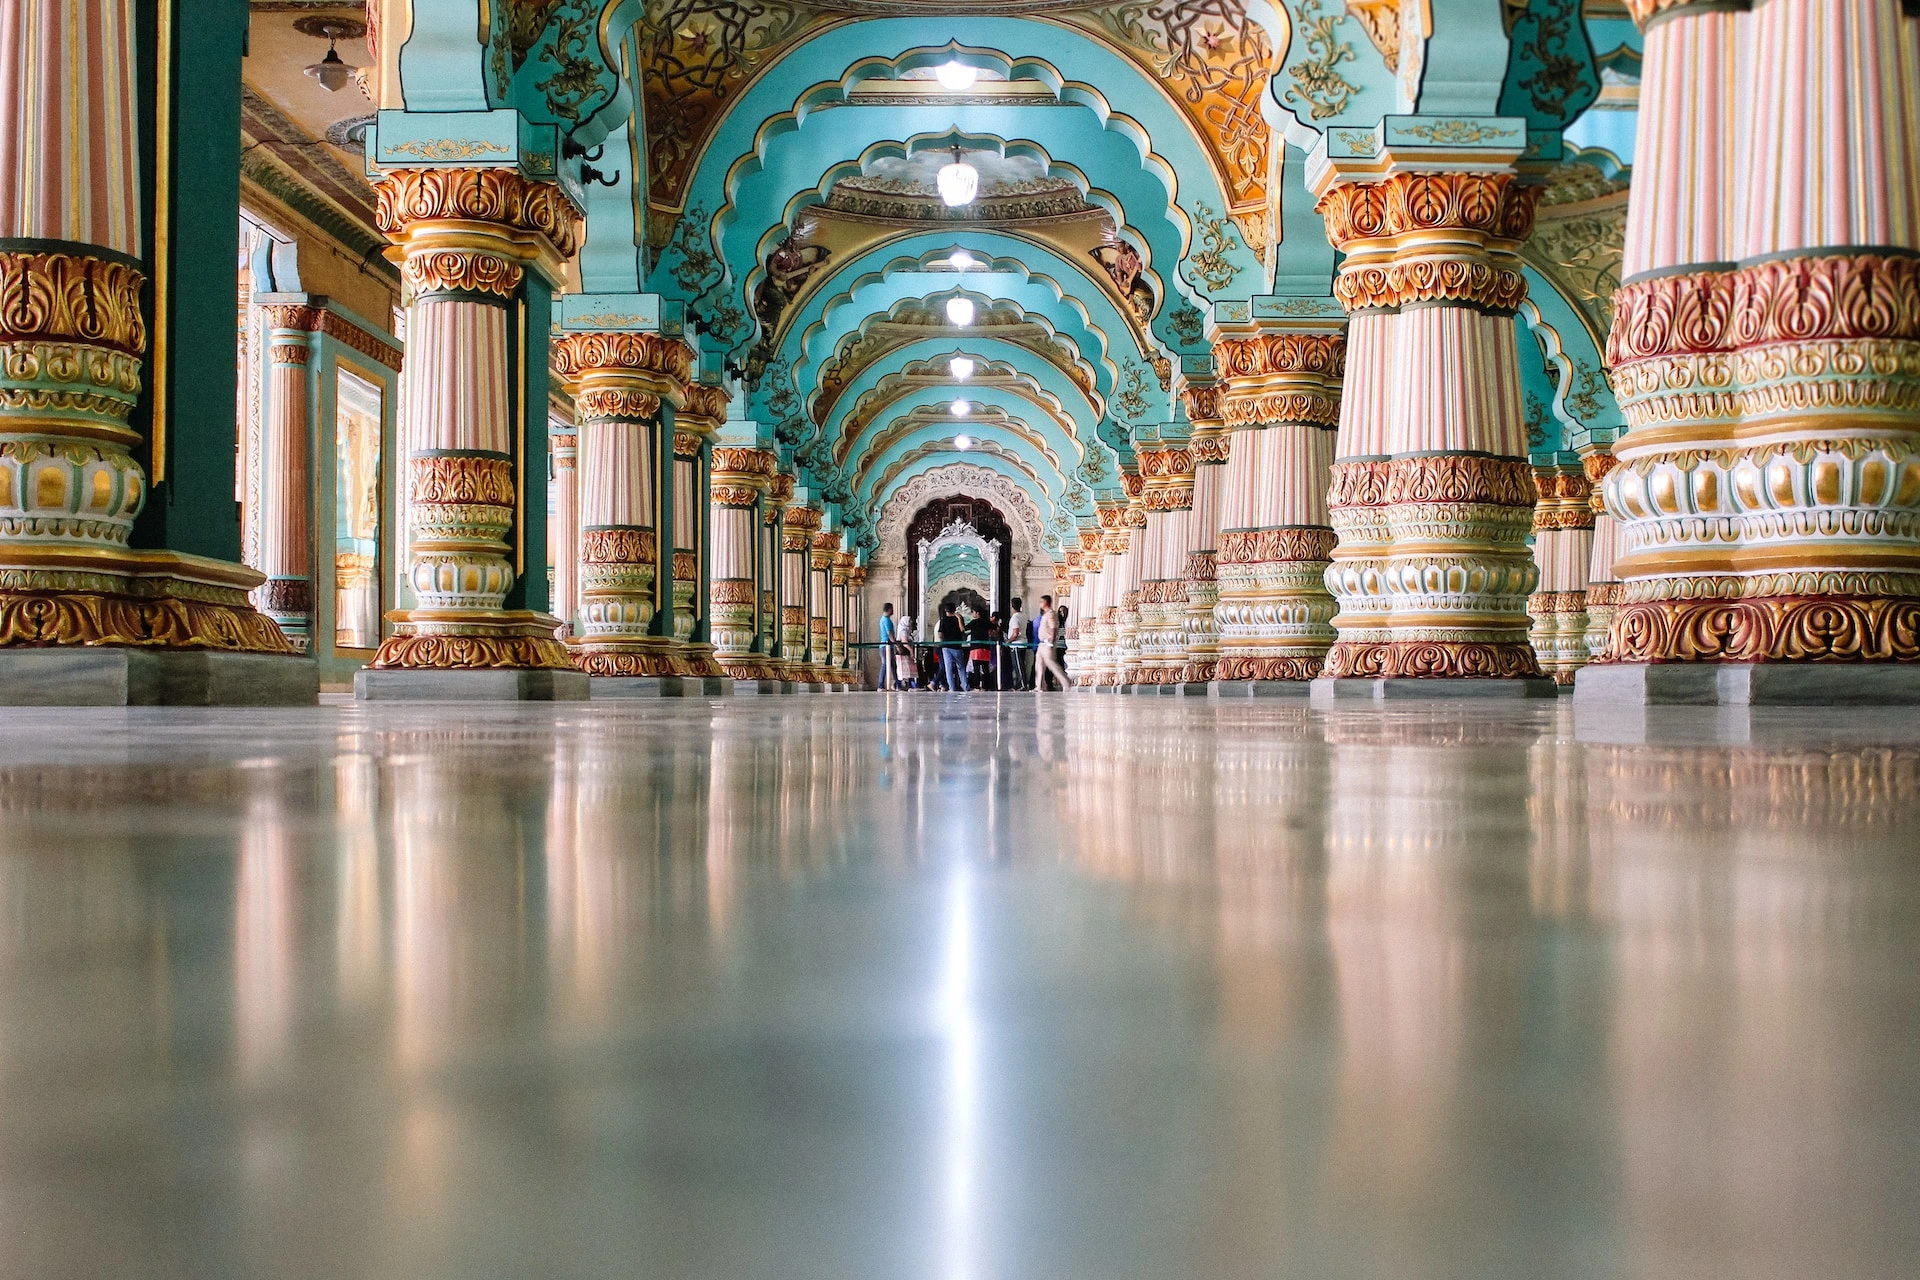 Mysore palace's exquisite architecture